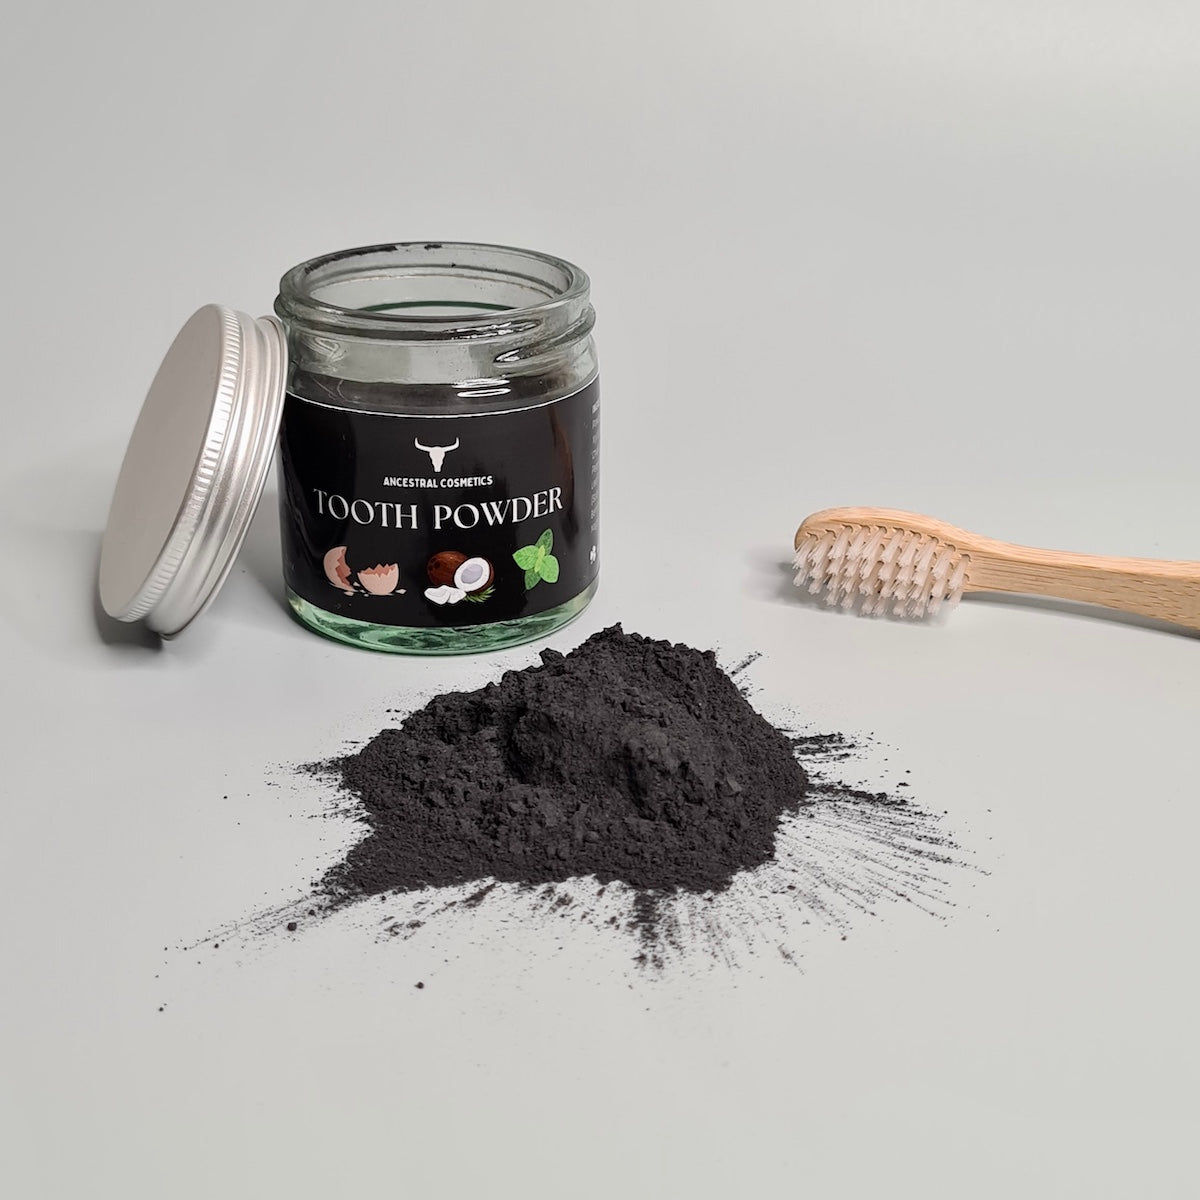 Remineralizing Natural Tooth Powder with Myrrh Neem Clove – Iber